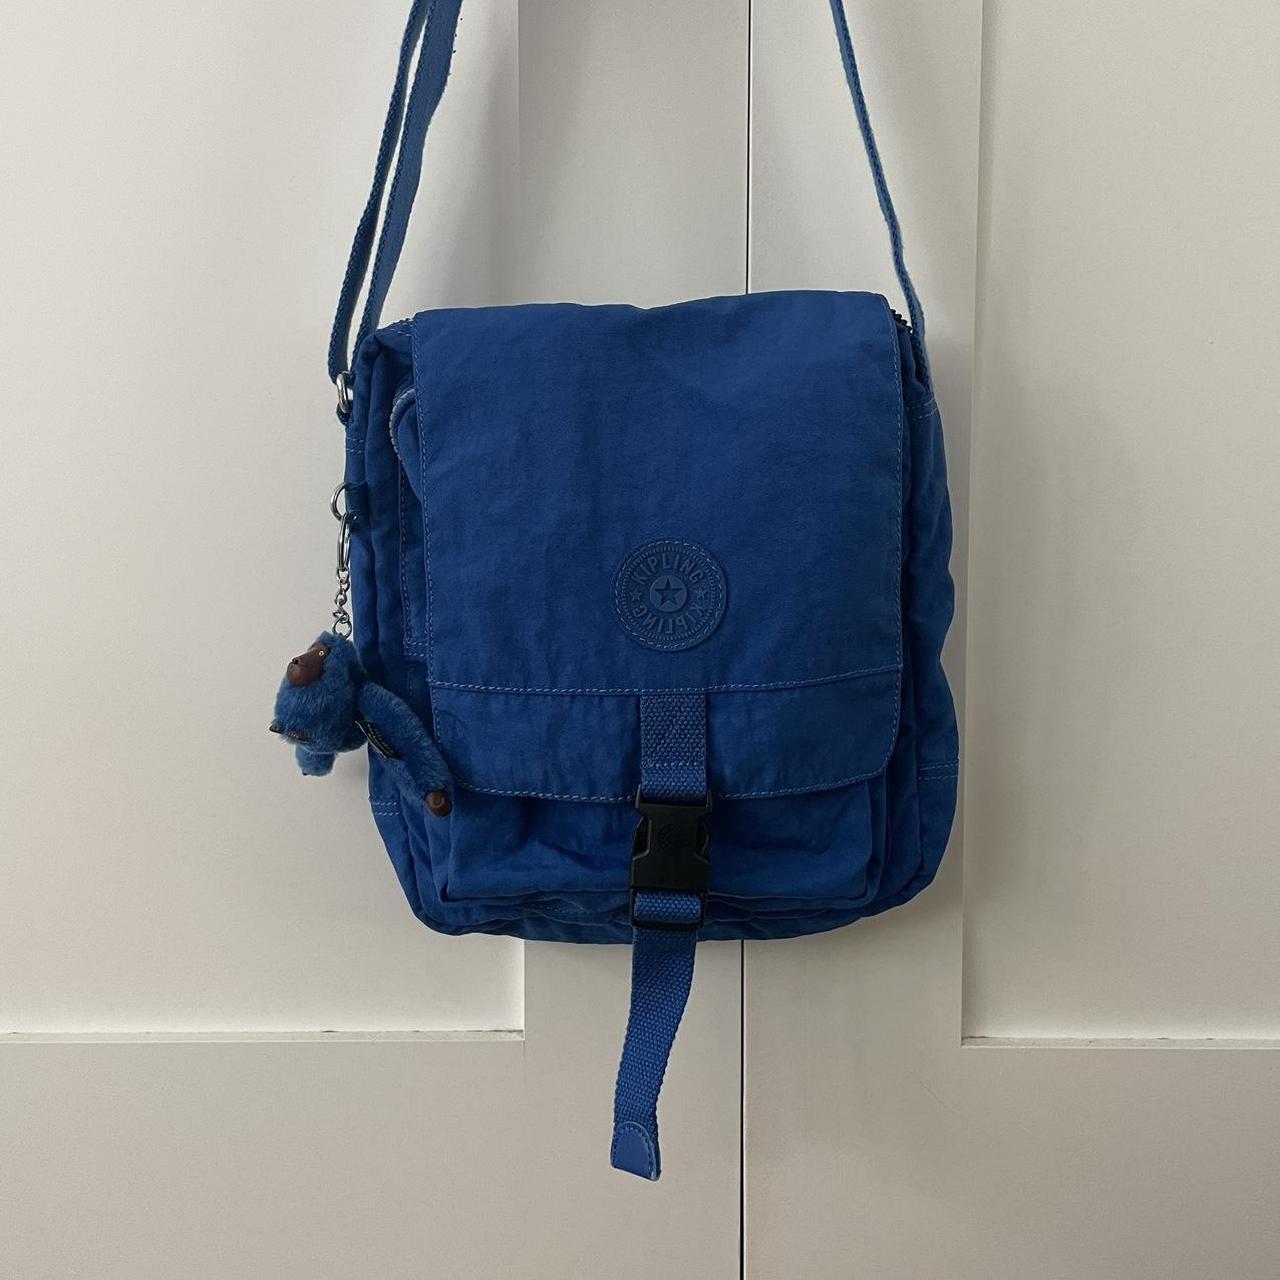 Kipling Women's Blue Bag | Depop